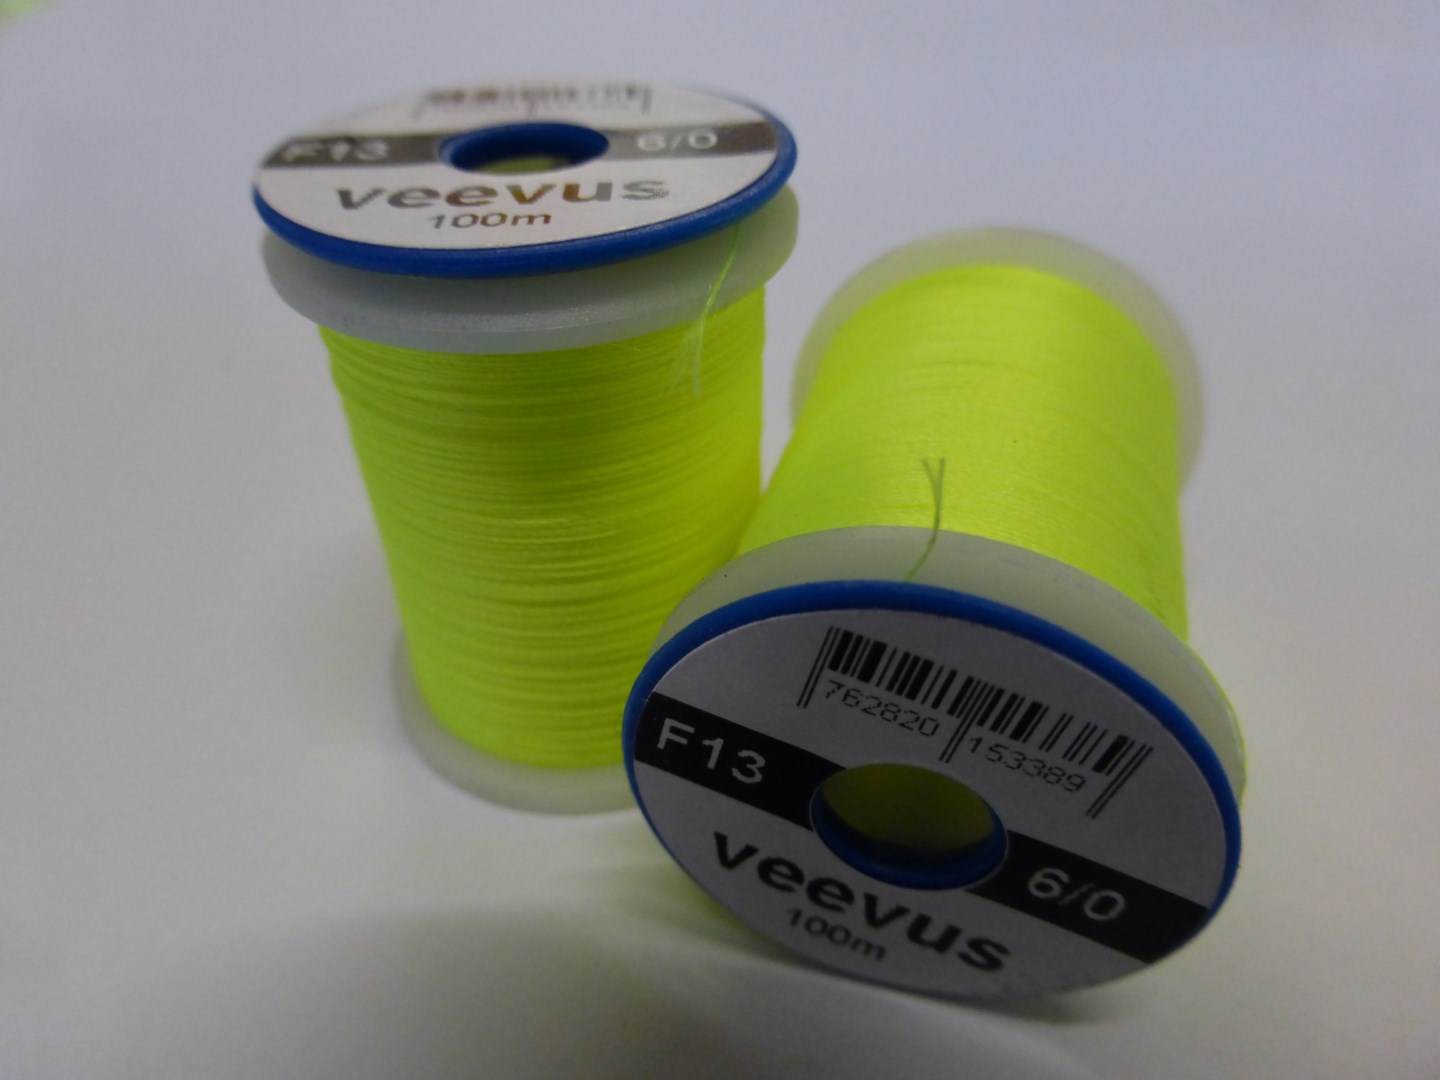 Veevus 6/0 Fluo Yellow F13